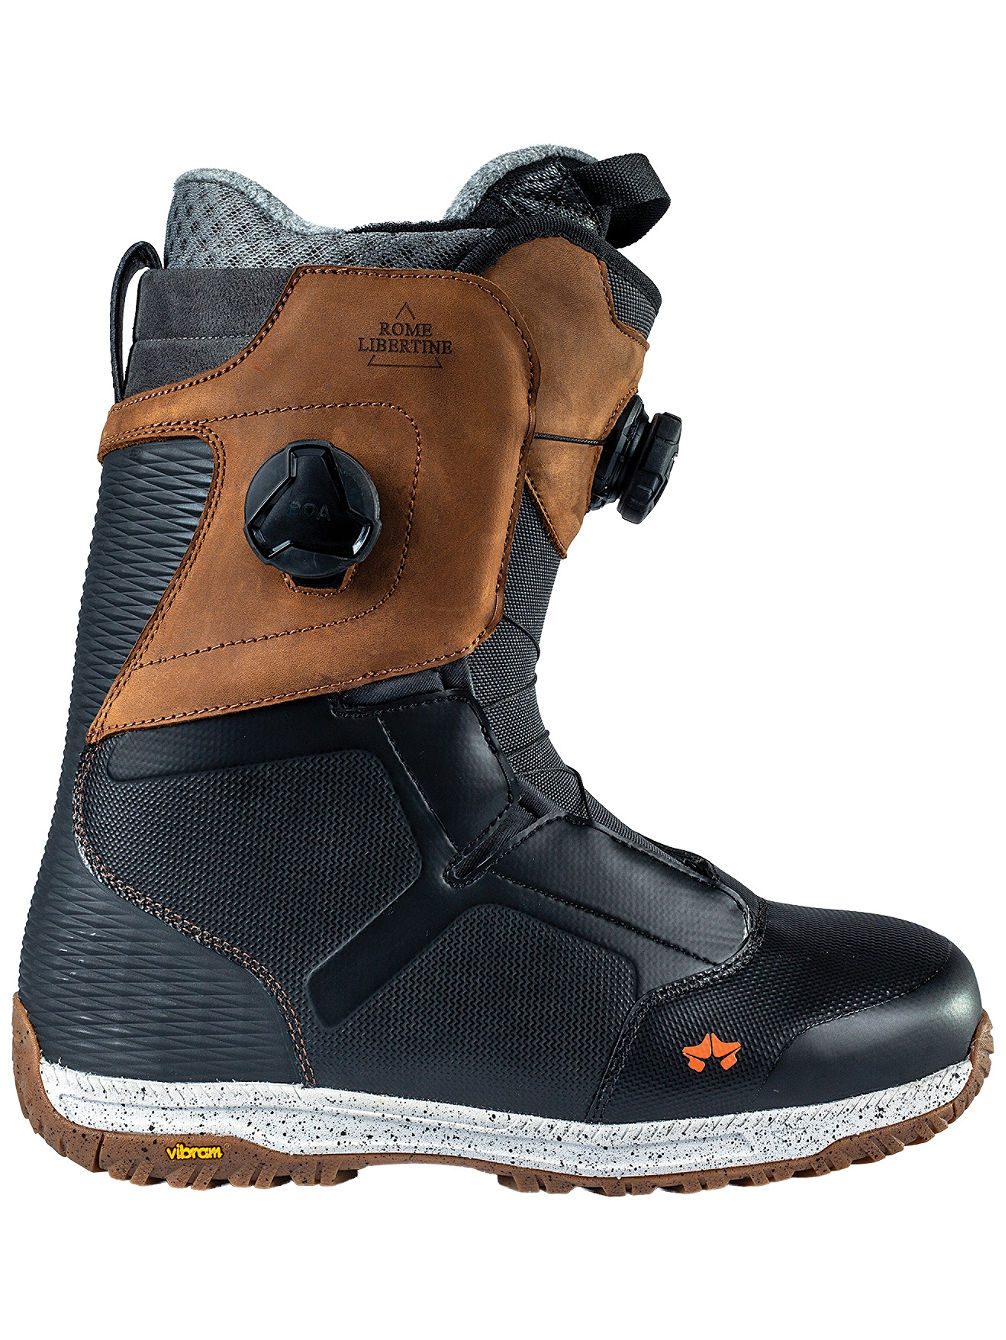 Libertine Boa 2022 Snowboard-Boots